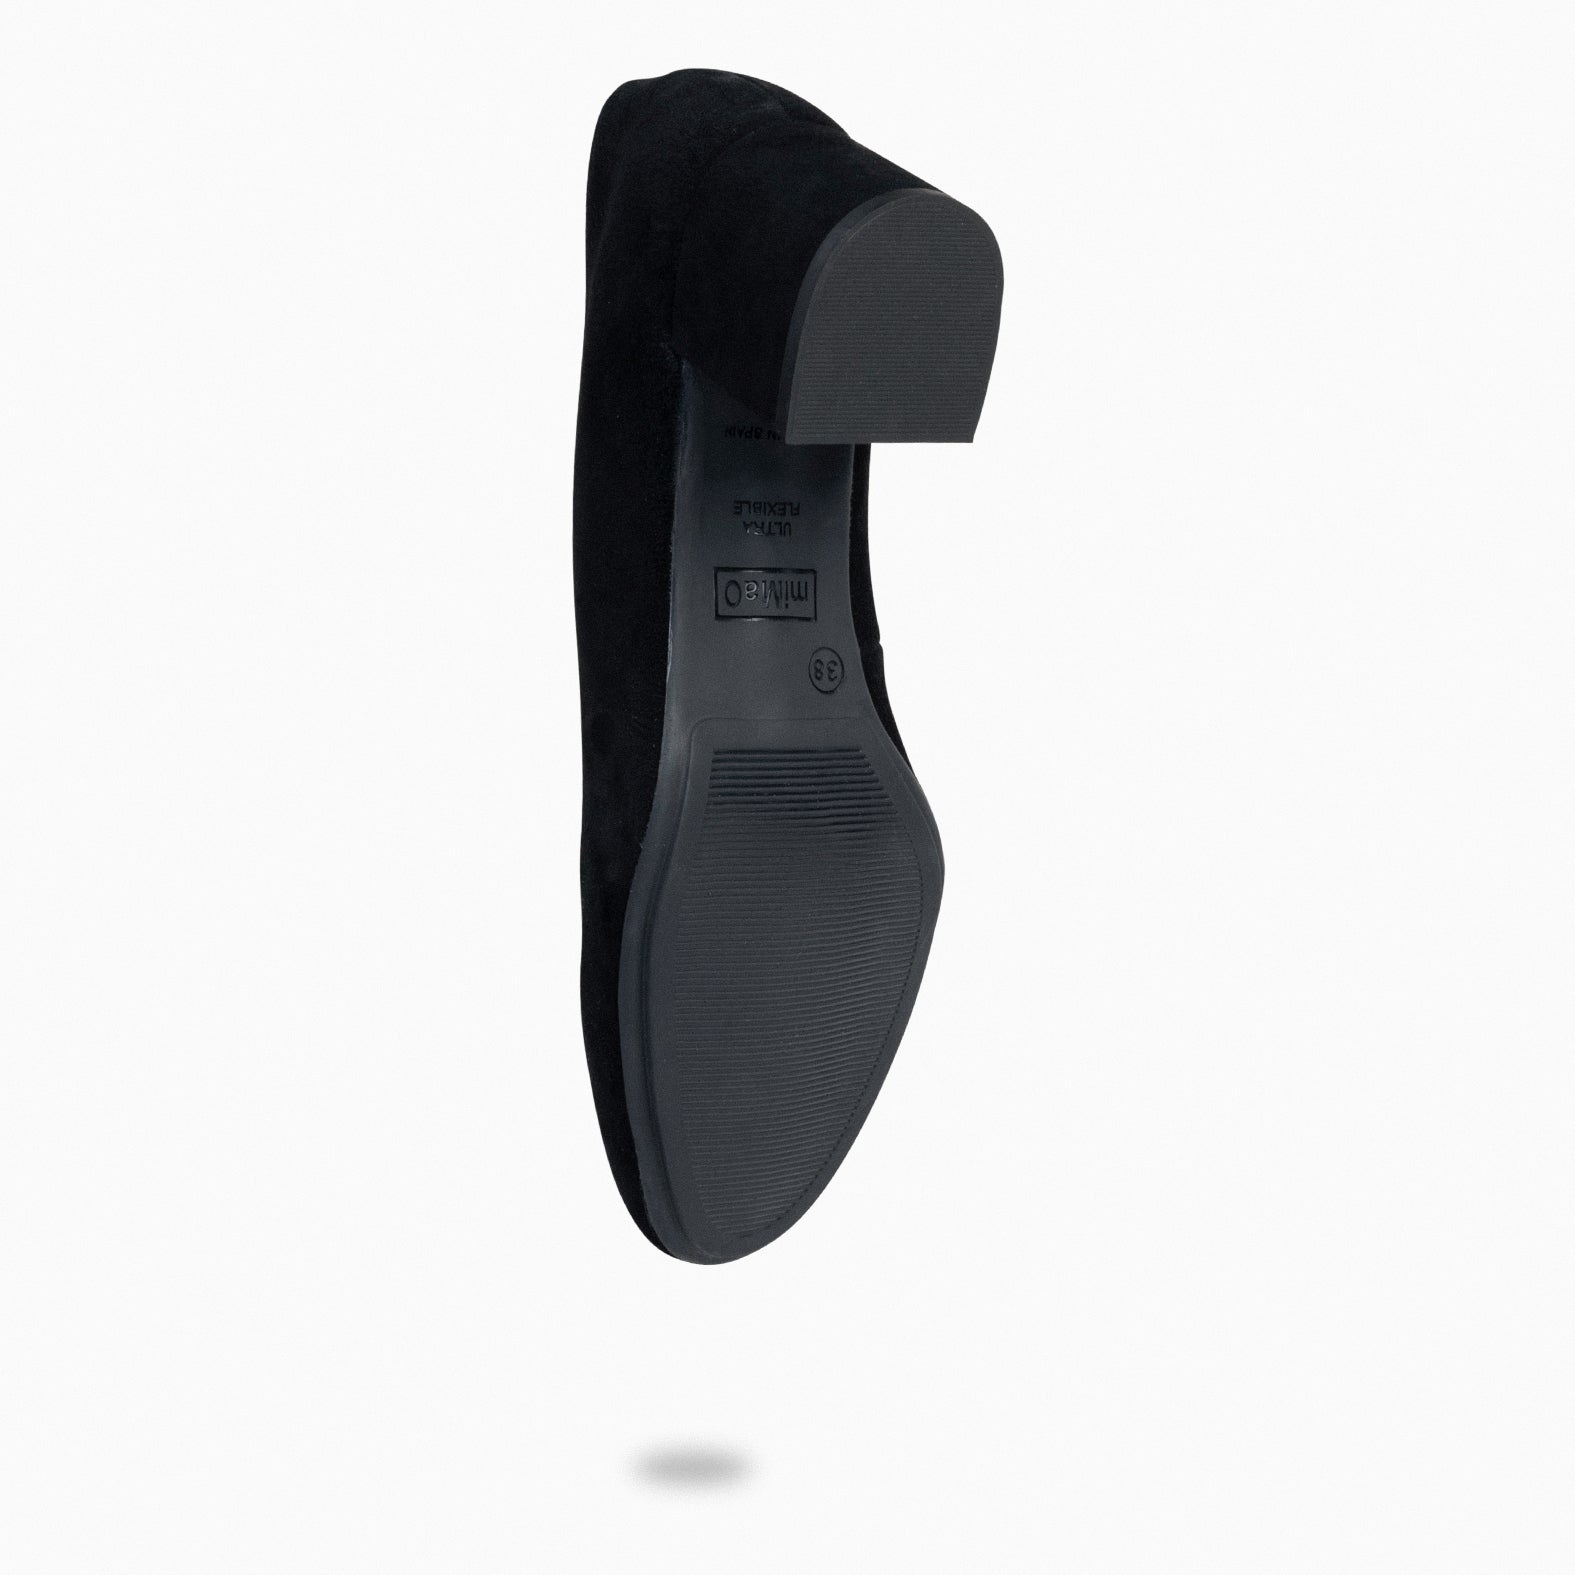 URBAN ROUND – BLACK suede leather low heels